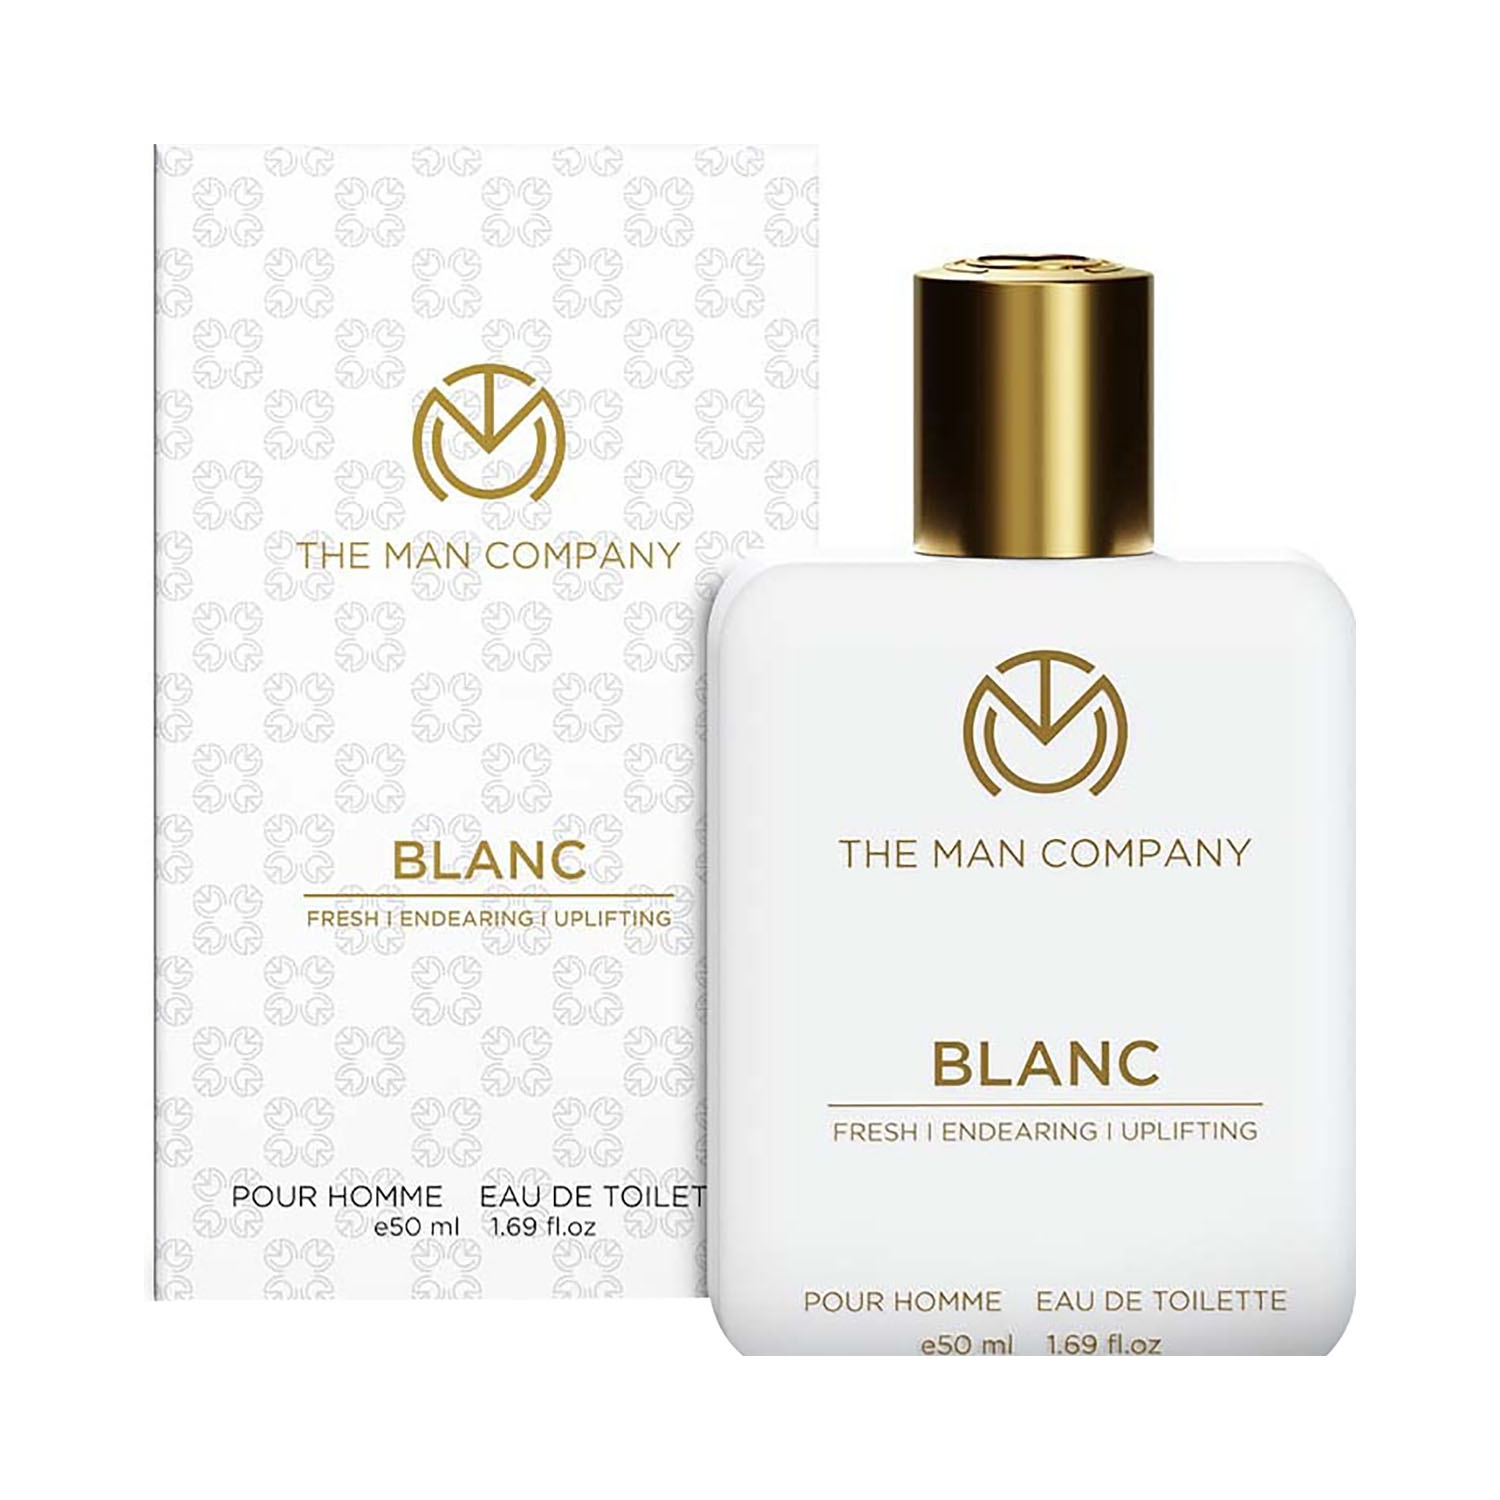 The Man Company | The Man Company Blanc Eau De Toilette (50ml)